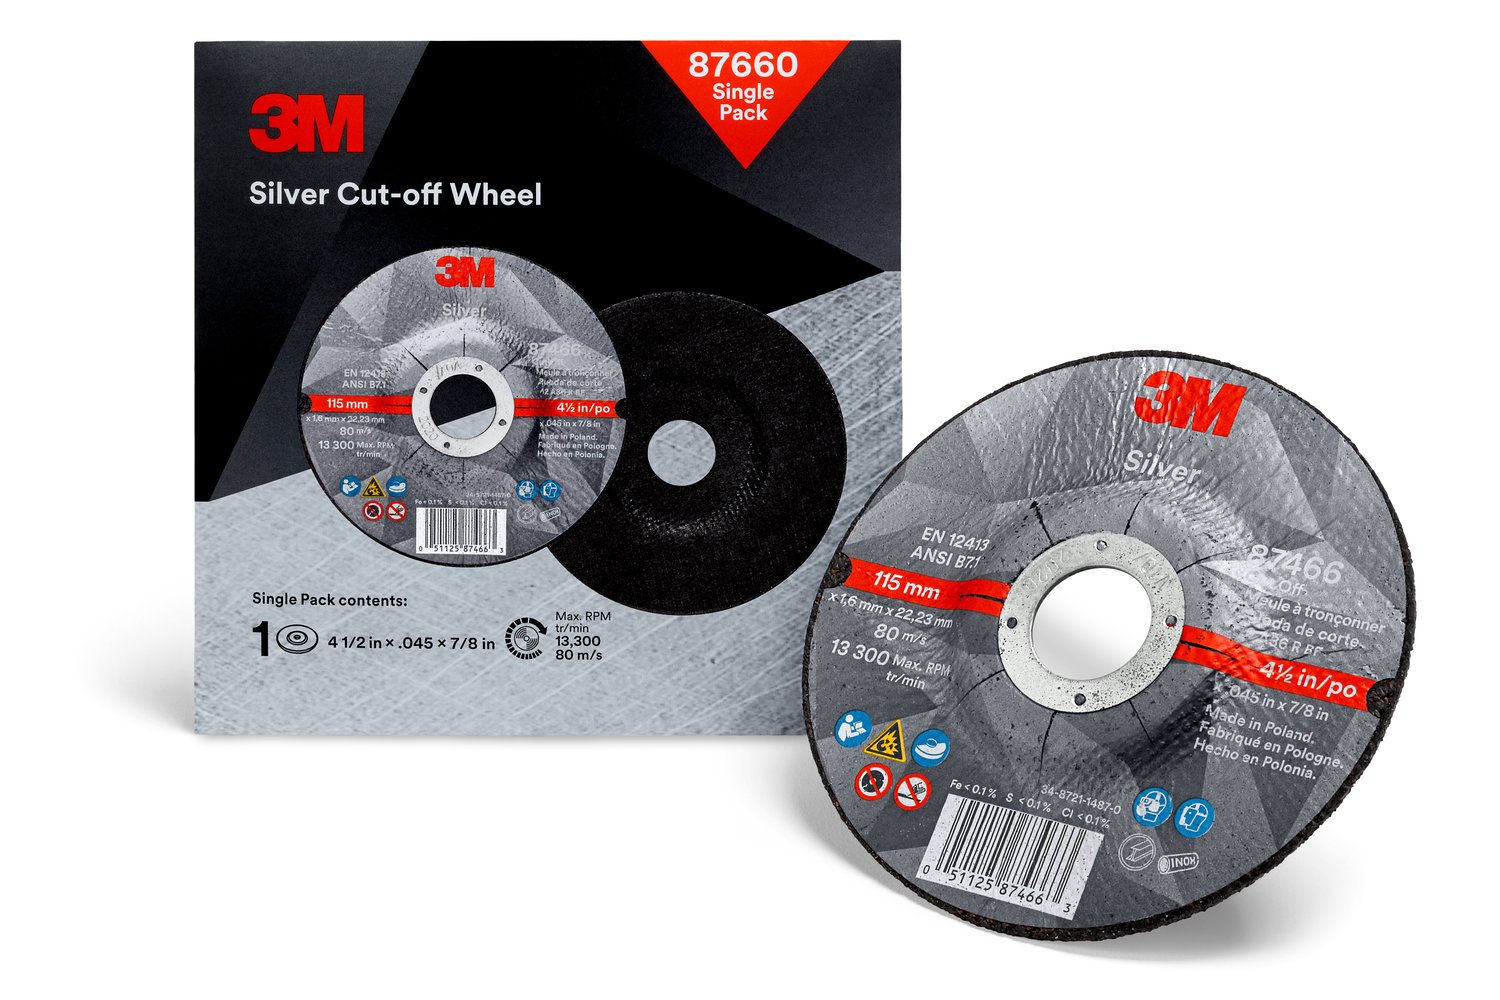 7100176080 - 3M Silver Cut-off Wheel 87660, T27 4.5 in x .045 in x 7/8 in, Point of
Purchase Display, 17/Display, 1 ea/Case